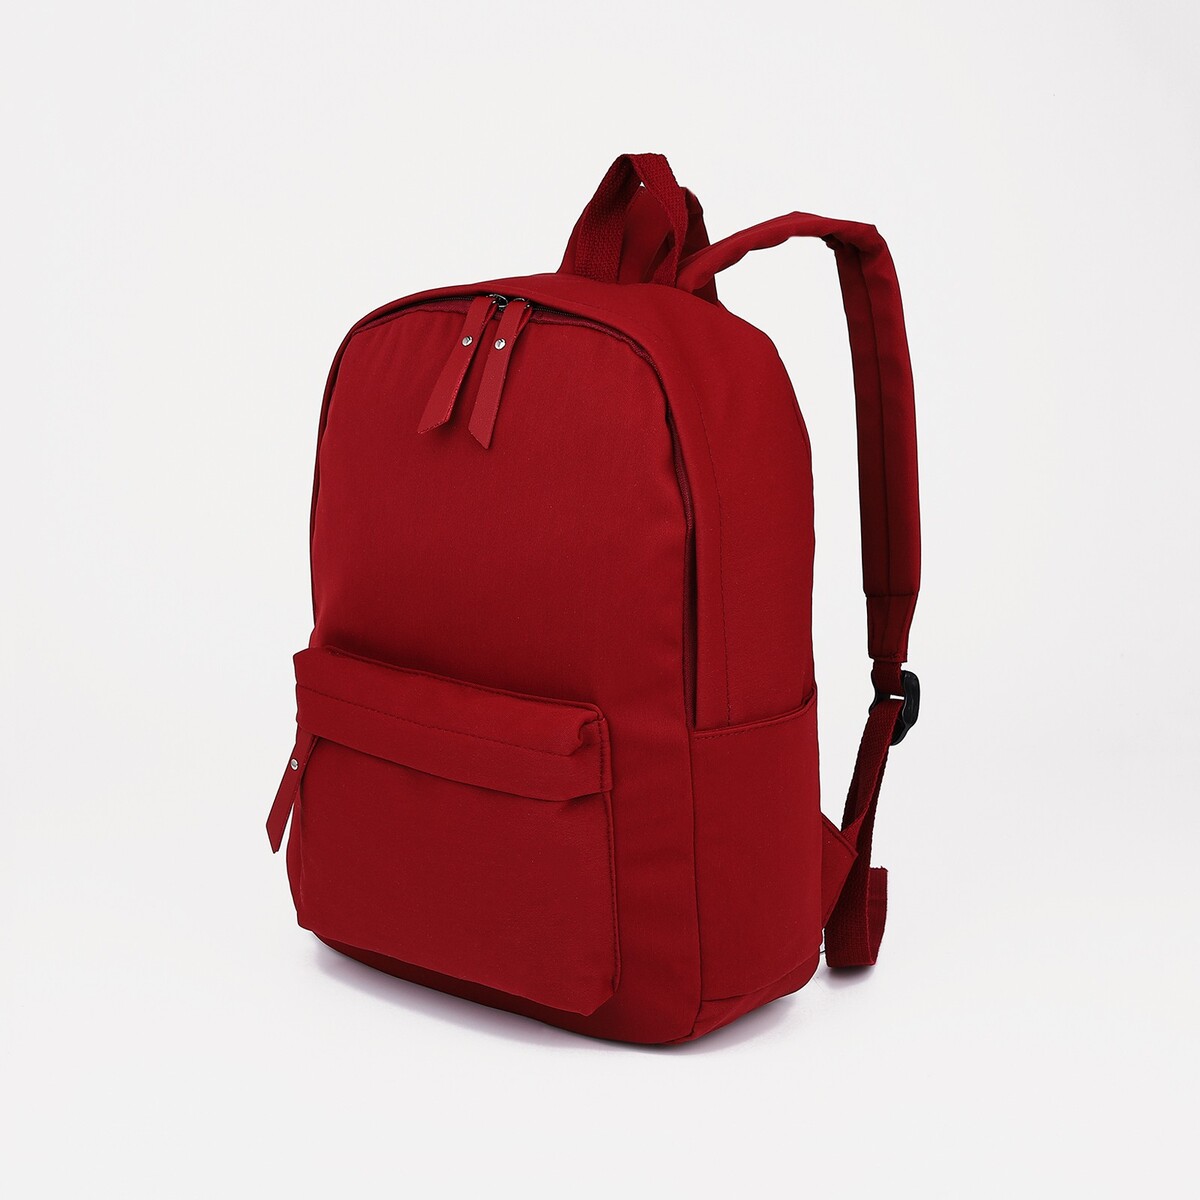 Рюкзак молодежный из текстиля, 4 кармана, цвет бордовый рюкзак молодежный на молнии 4 кармана бордовый